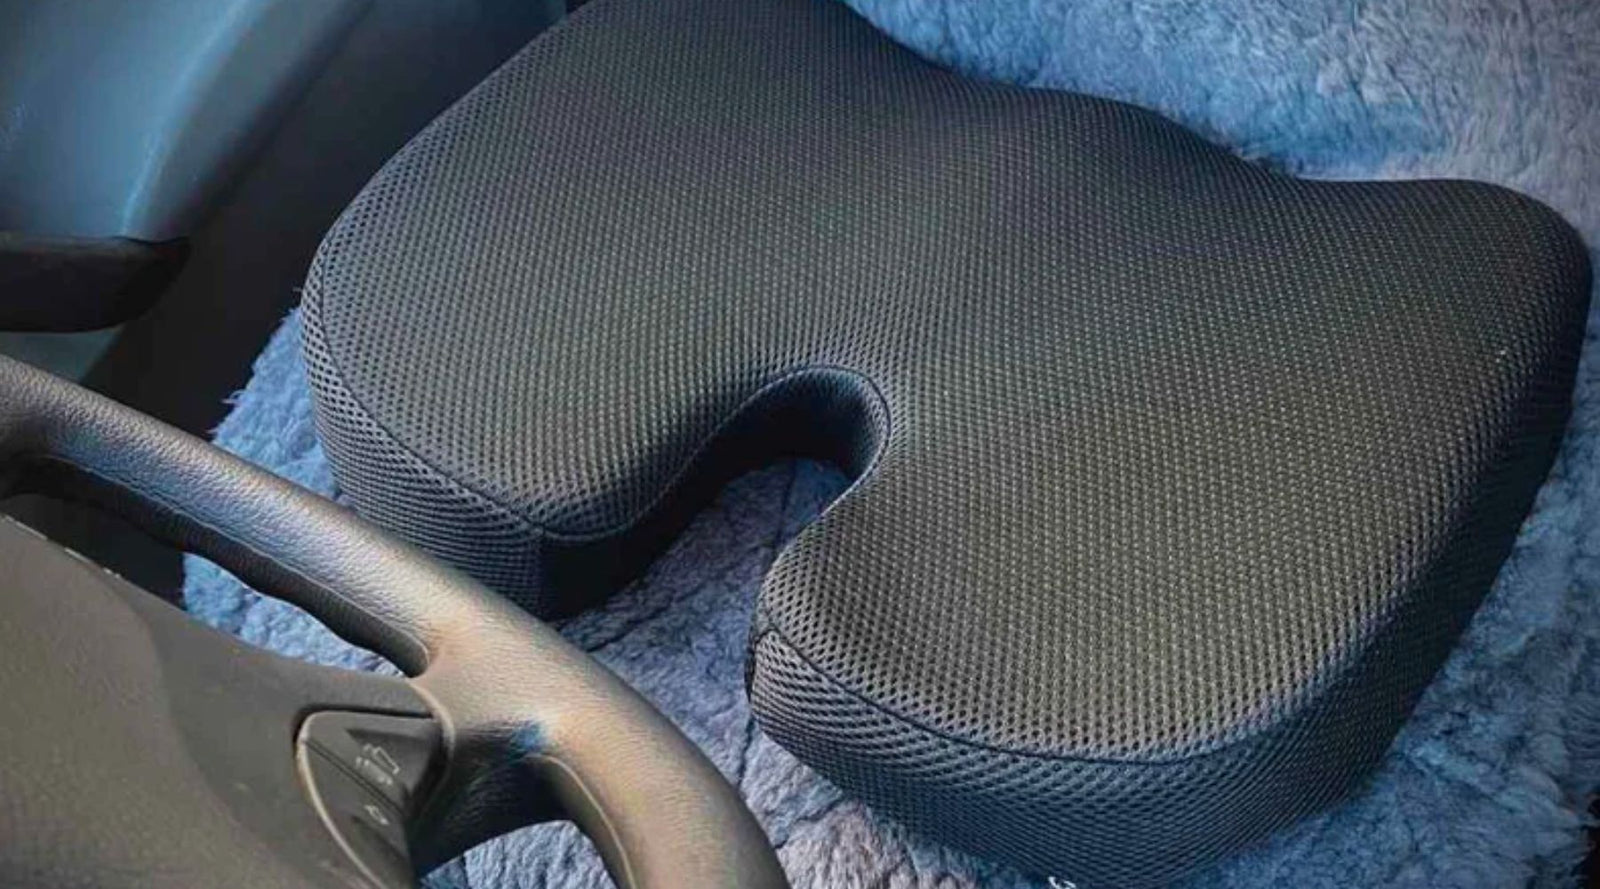 Car Seat Cushion for Car Seat Driver - Memory Foam Car Seat